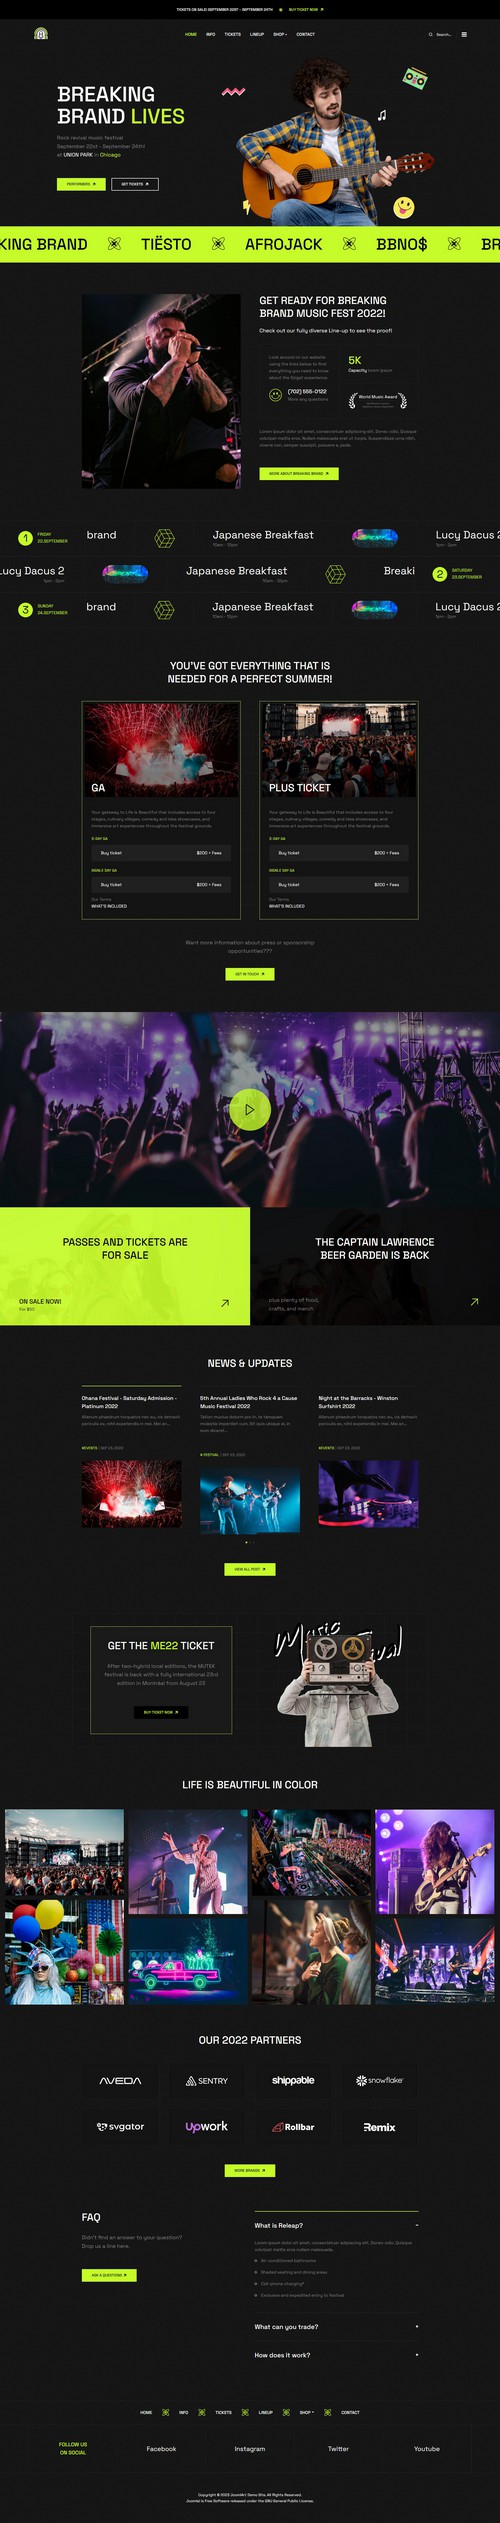 JA Festival - Joomla 4 Template for Events Festival Websites